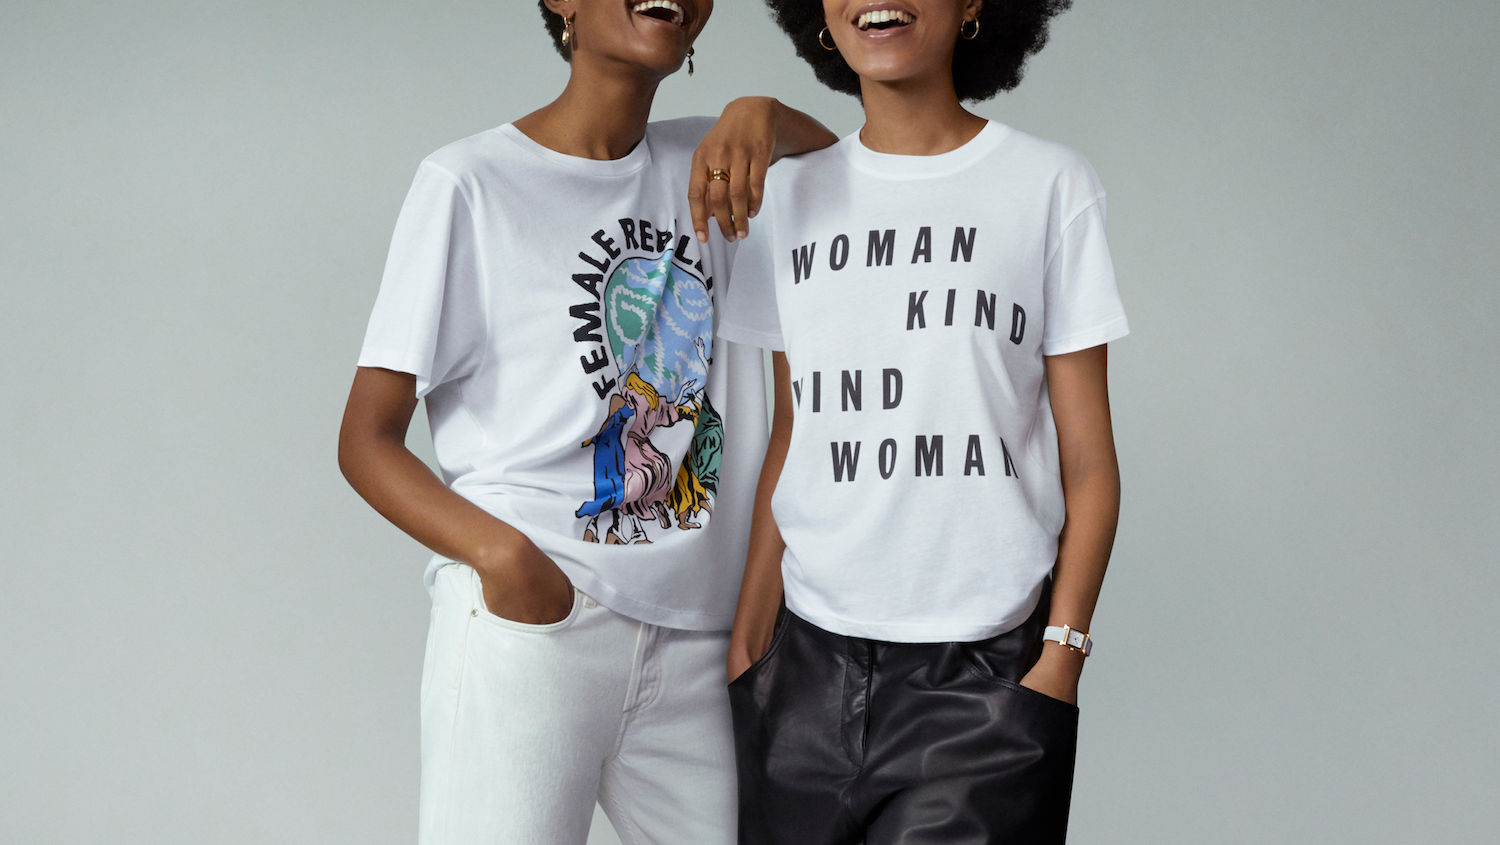 Net-A-Porter honours International Women’s Day with 20 designer T-shirts